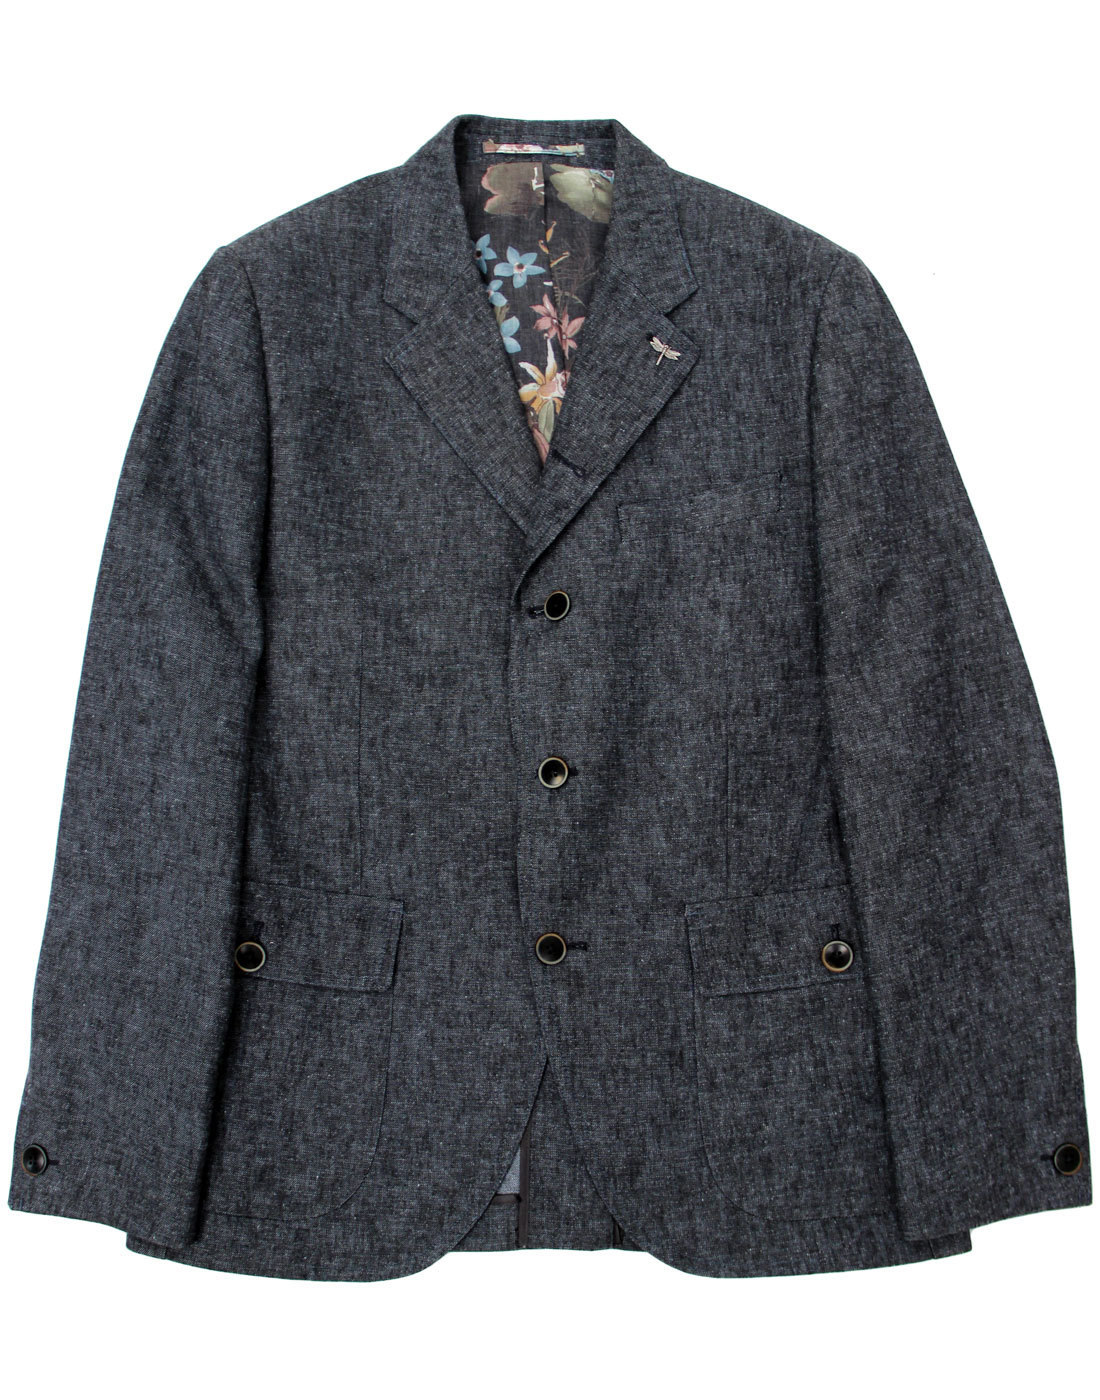 GIBSON LONDON Grouse Retro Mod Denim Linen Fleck Blazer Jacket